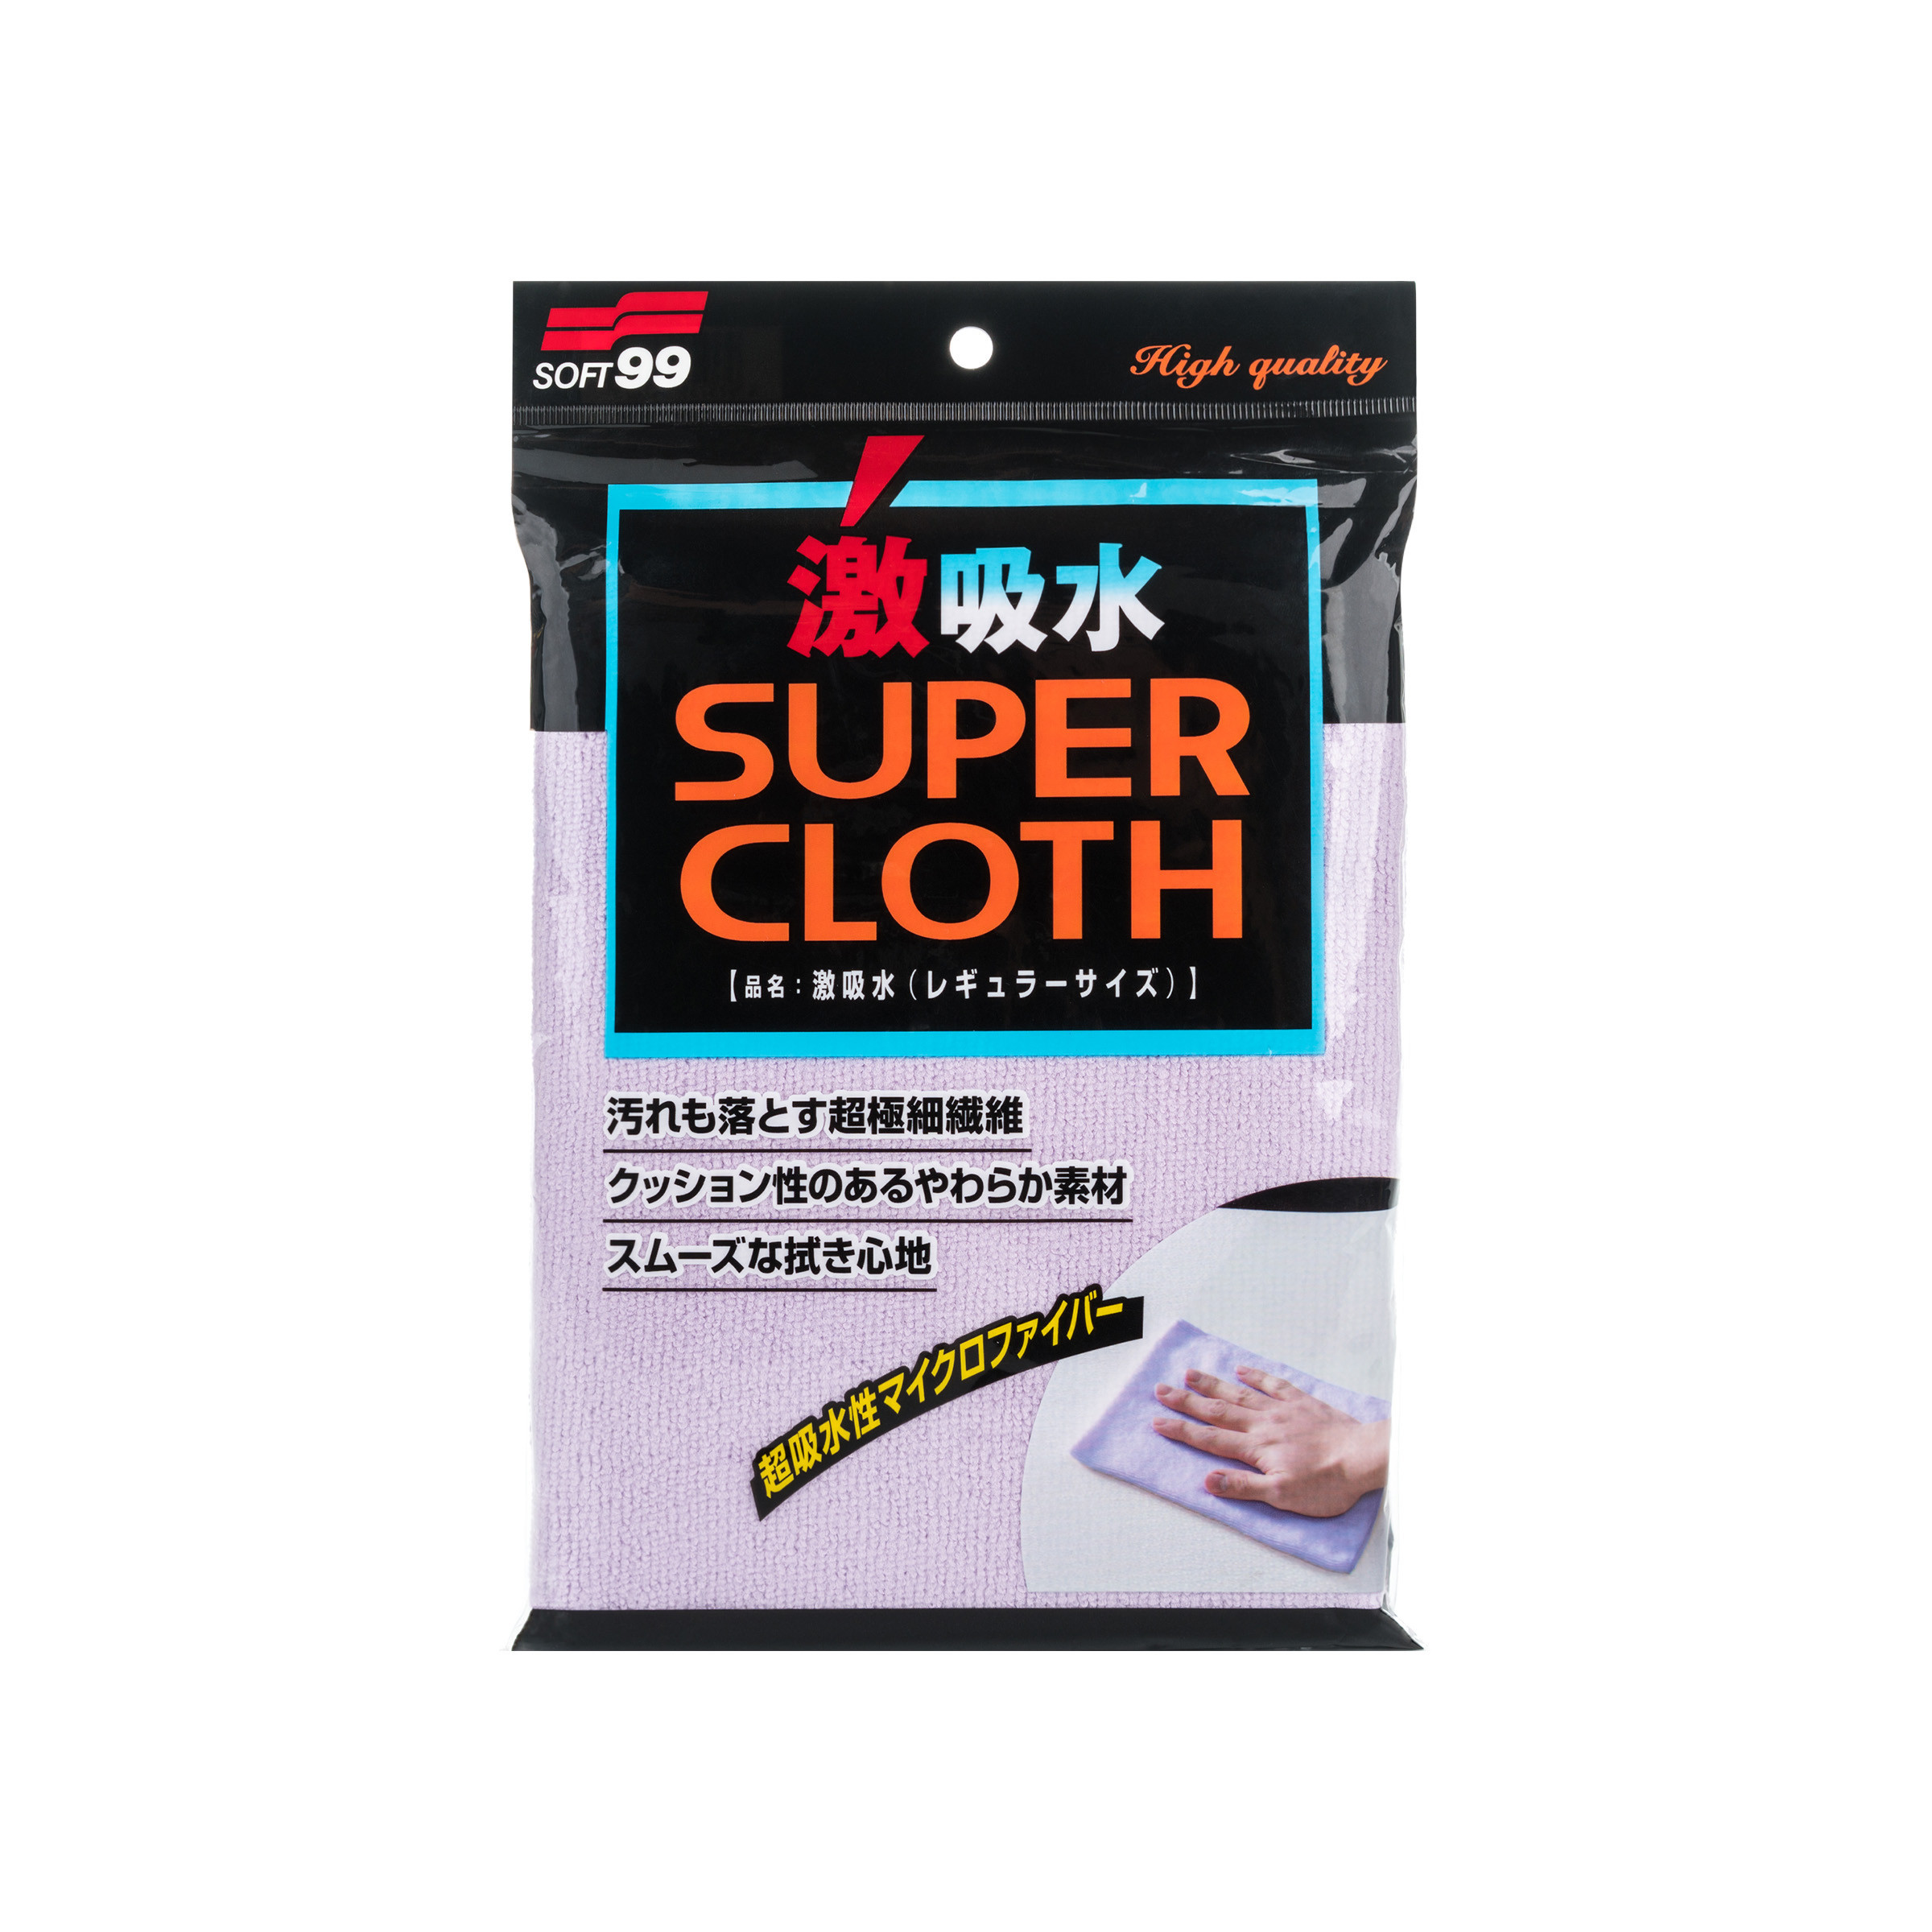 Microfiber Super Cloth, Mikrofasertuch